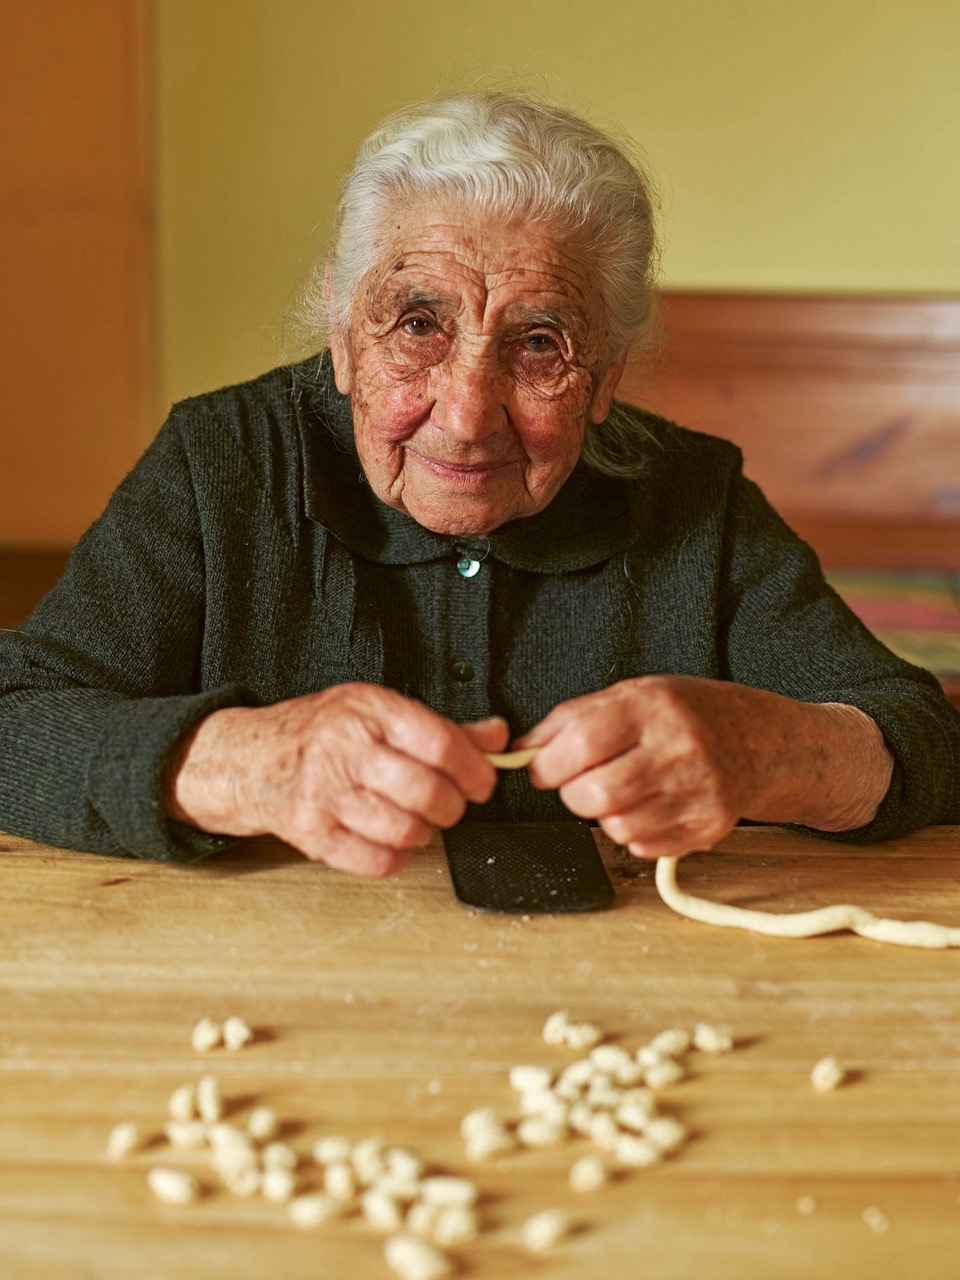 Meet The Pasta Grannies The Italian Nonnas Saving Handmade Pasta One Youtube Video At A Time 